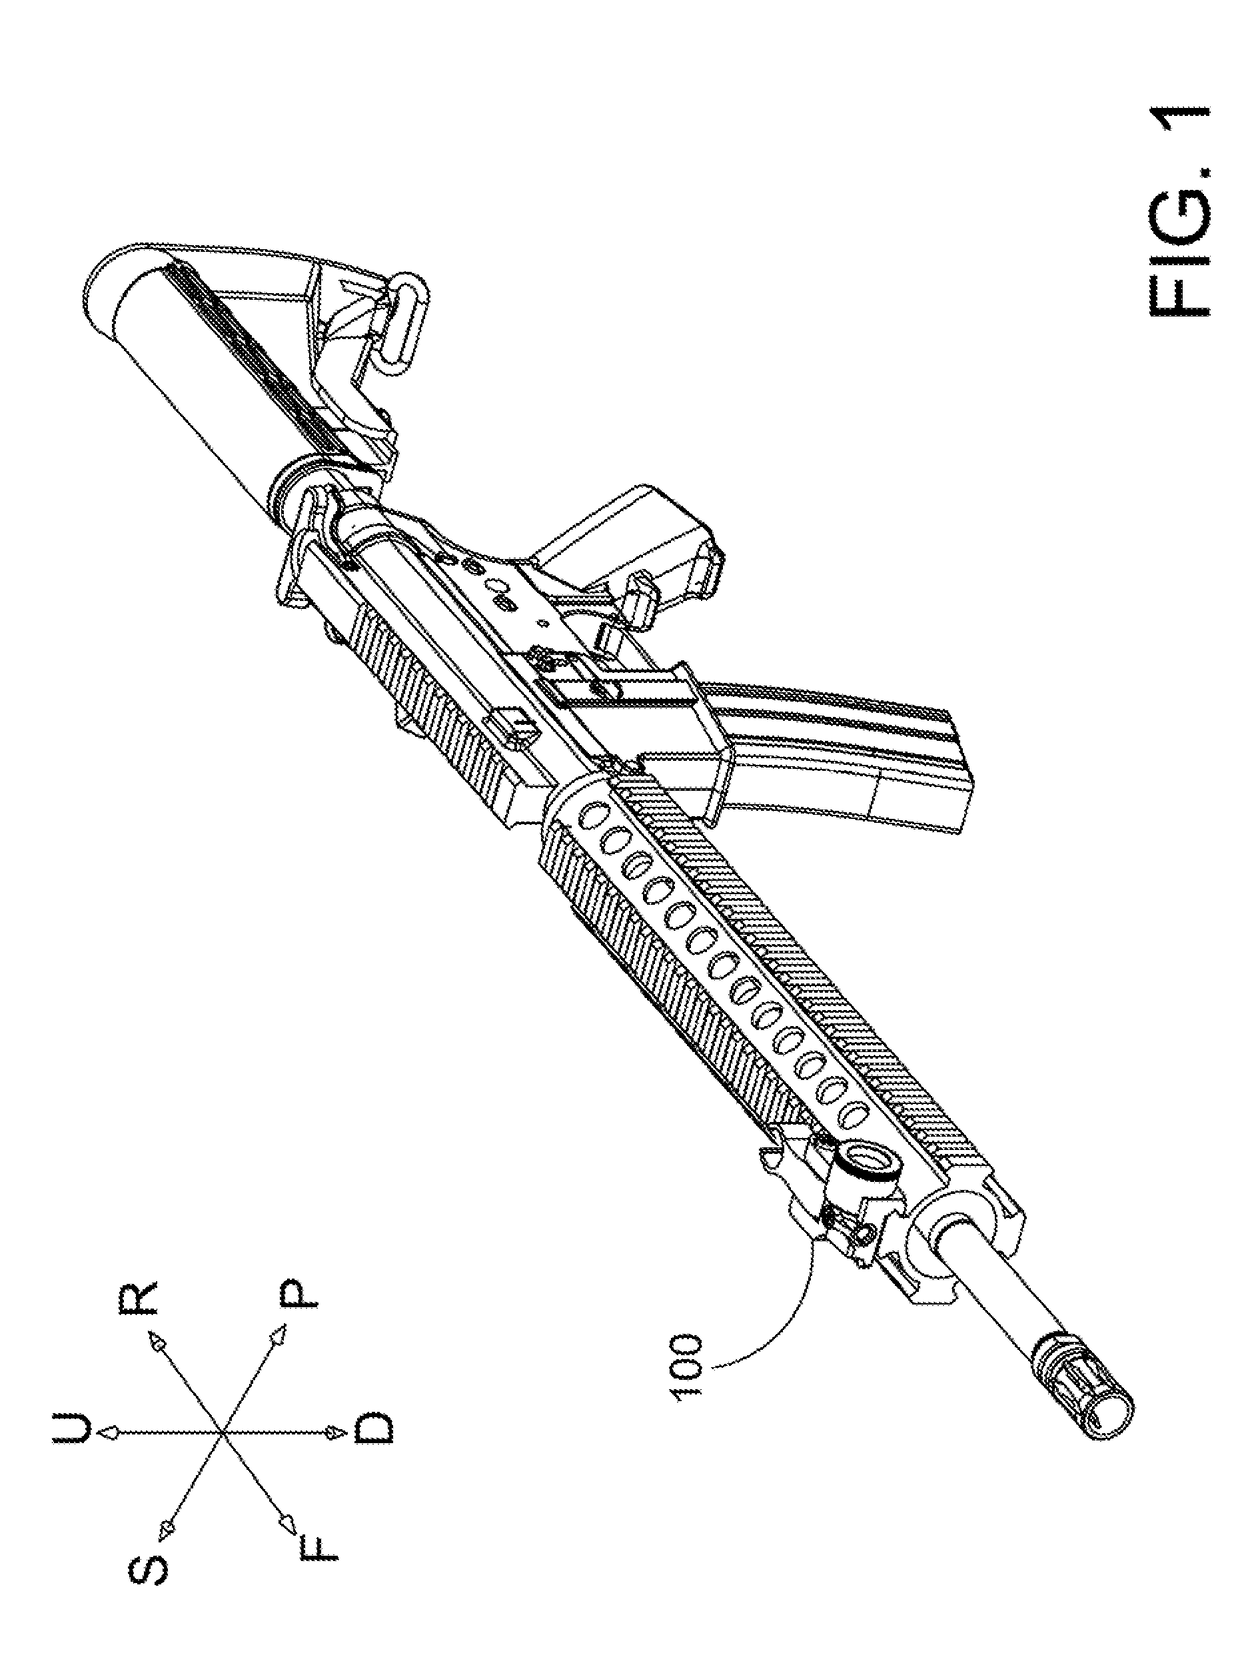 Multi-function gunsight